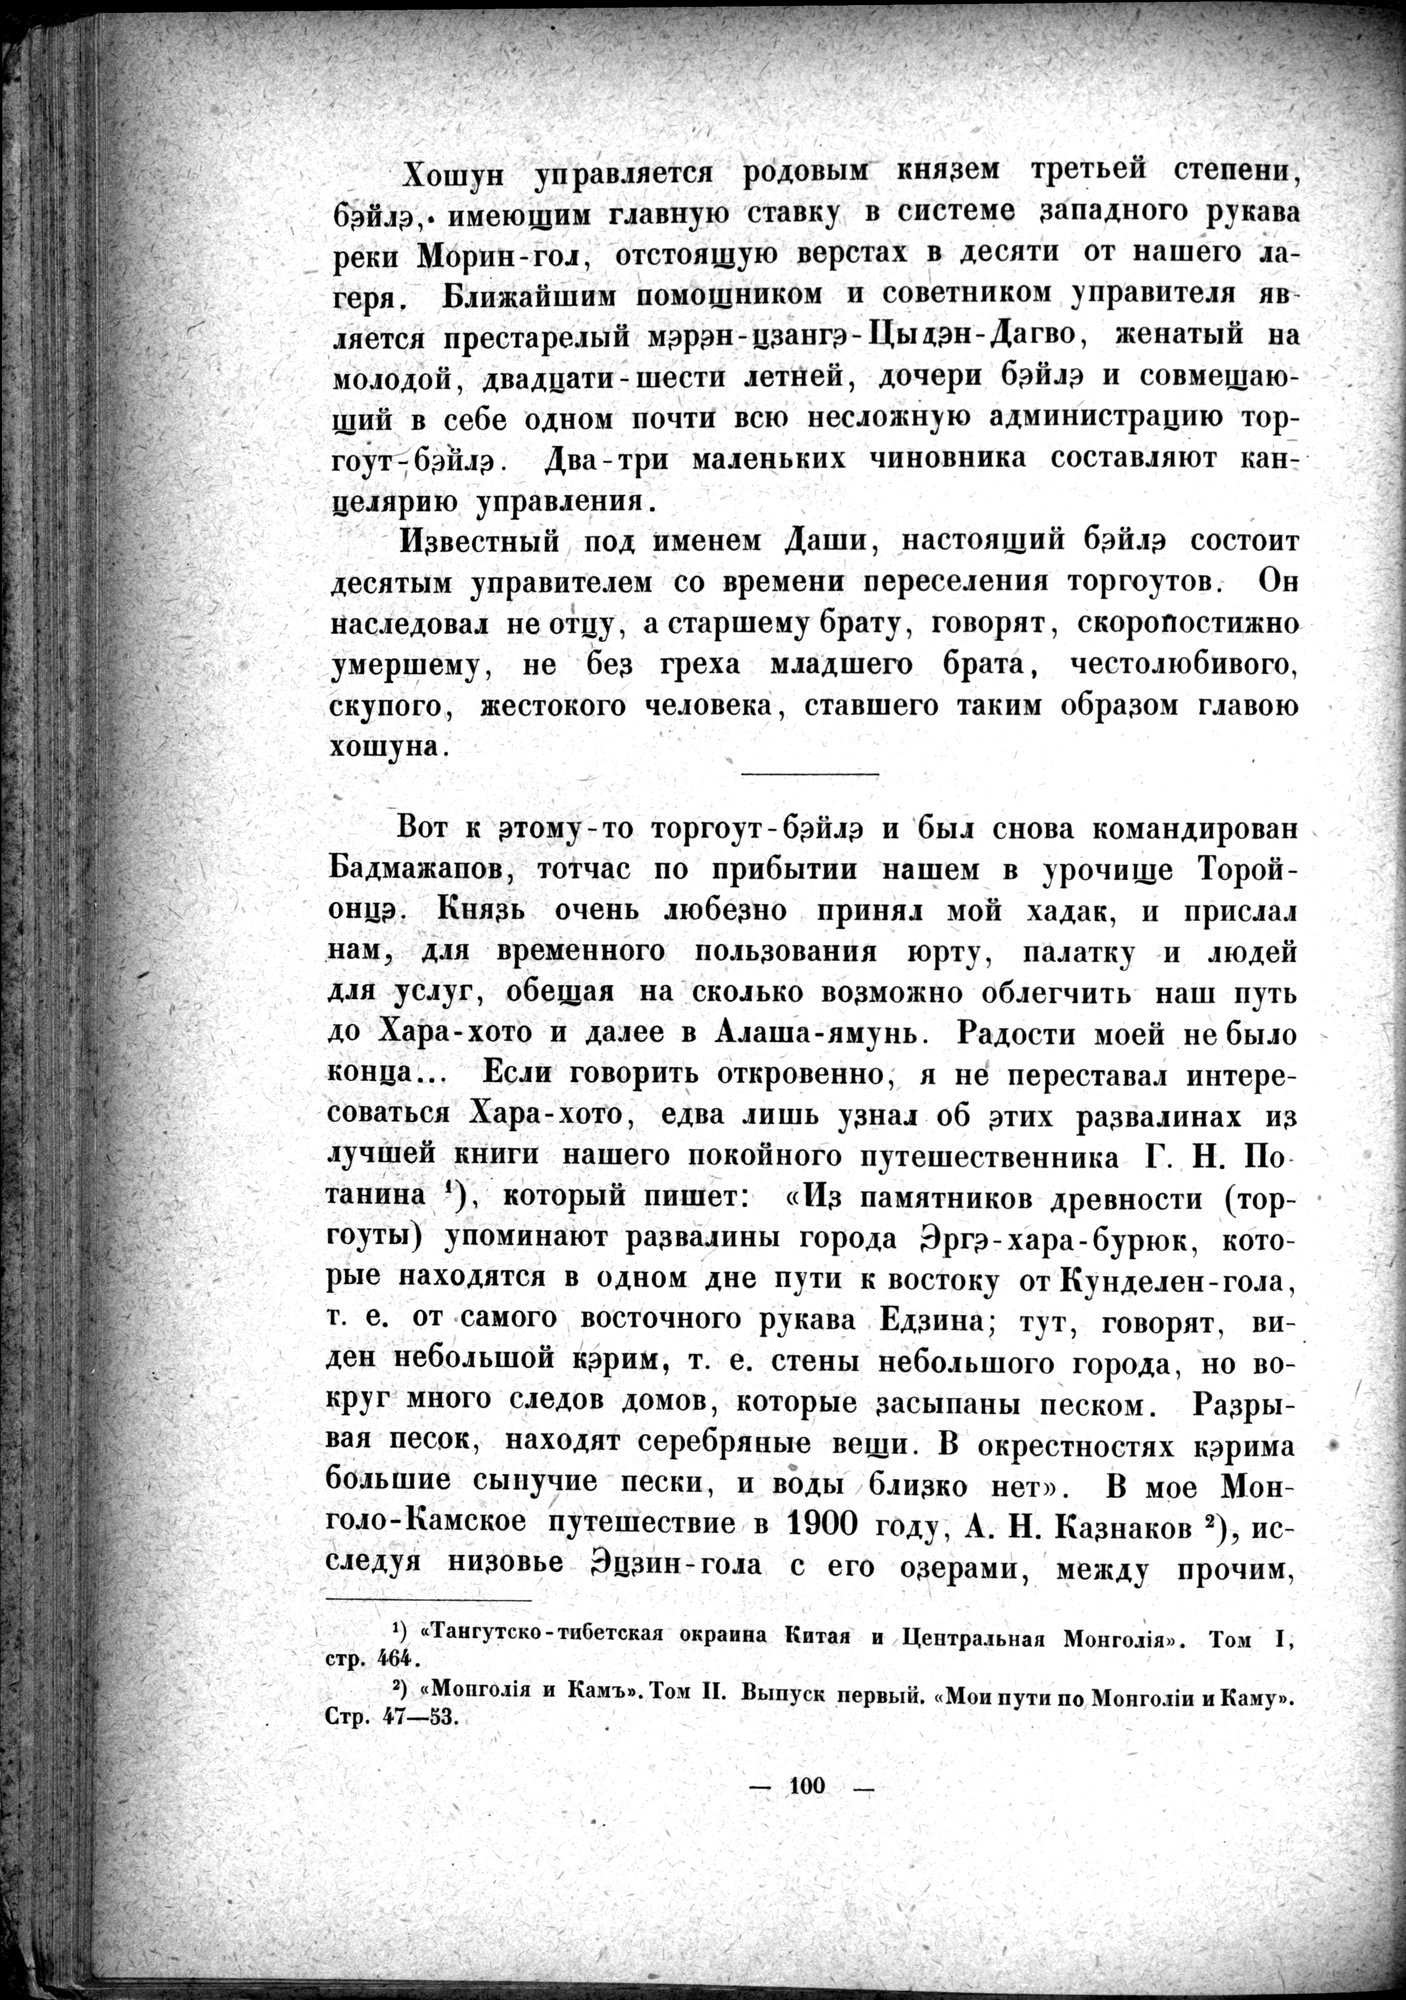 Mongoliya i Amdo i mertby gorod Khara-Khoto : vol.1 / Page 126 (Grayscale High Resolution Image)